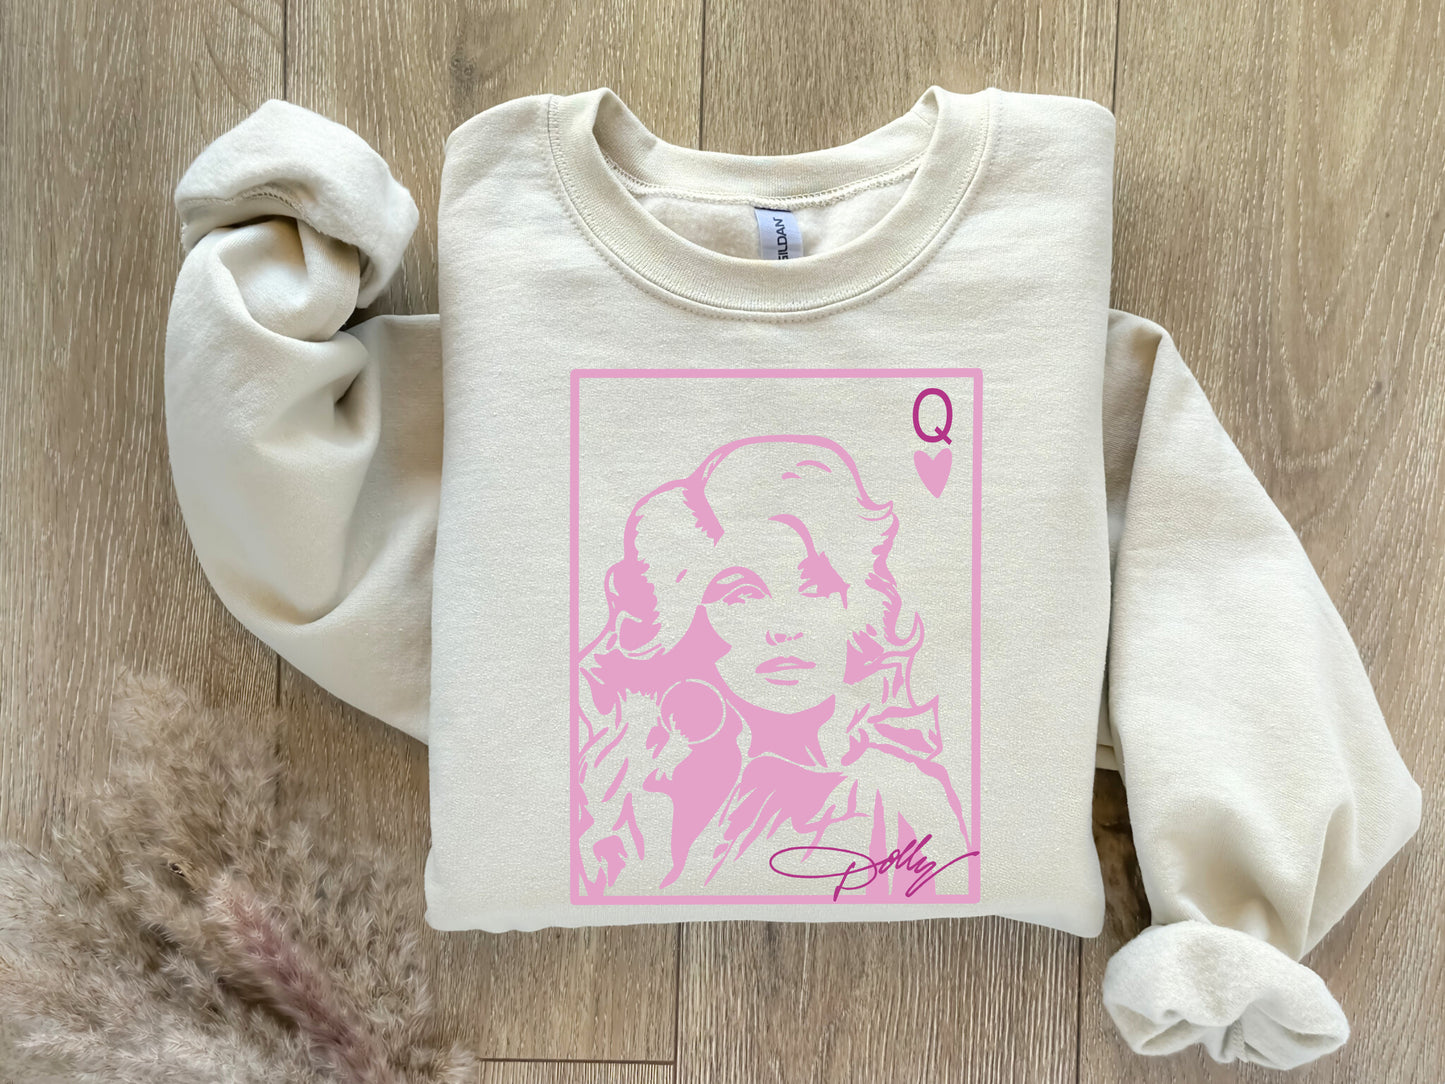 Valentine's Day Sweatshirt /  Queen Dolly Parton / Queen Of Hearts Card design sweatshirt crewneck